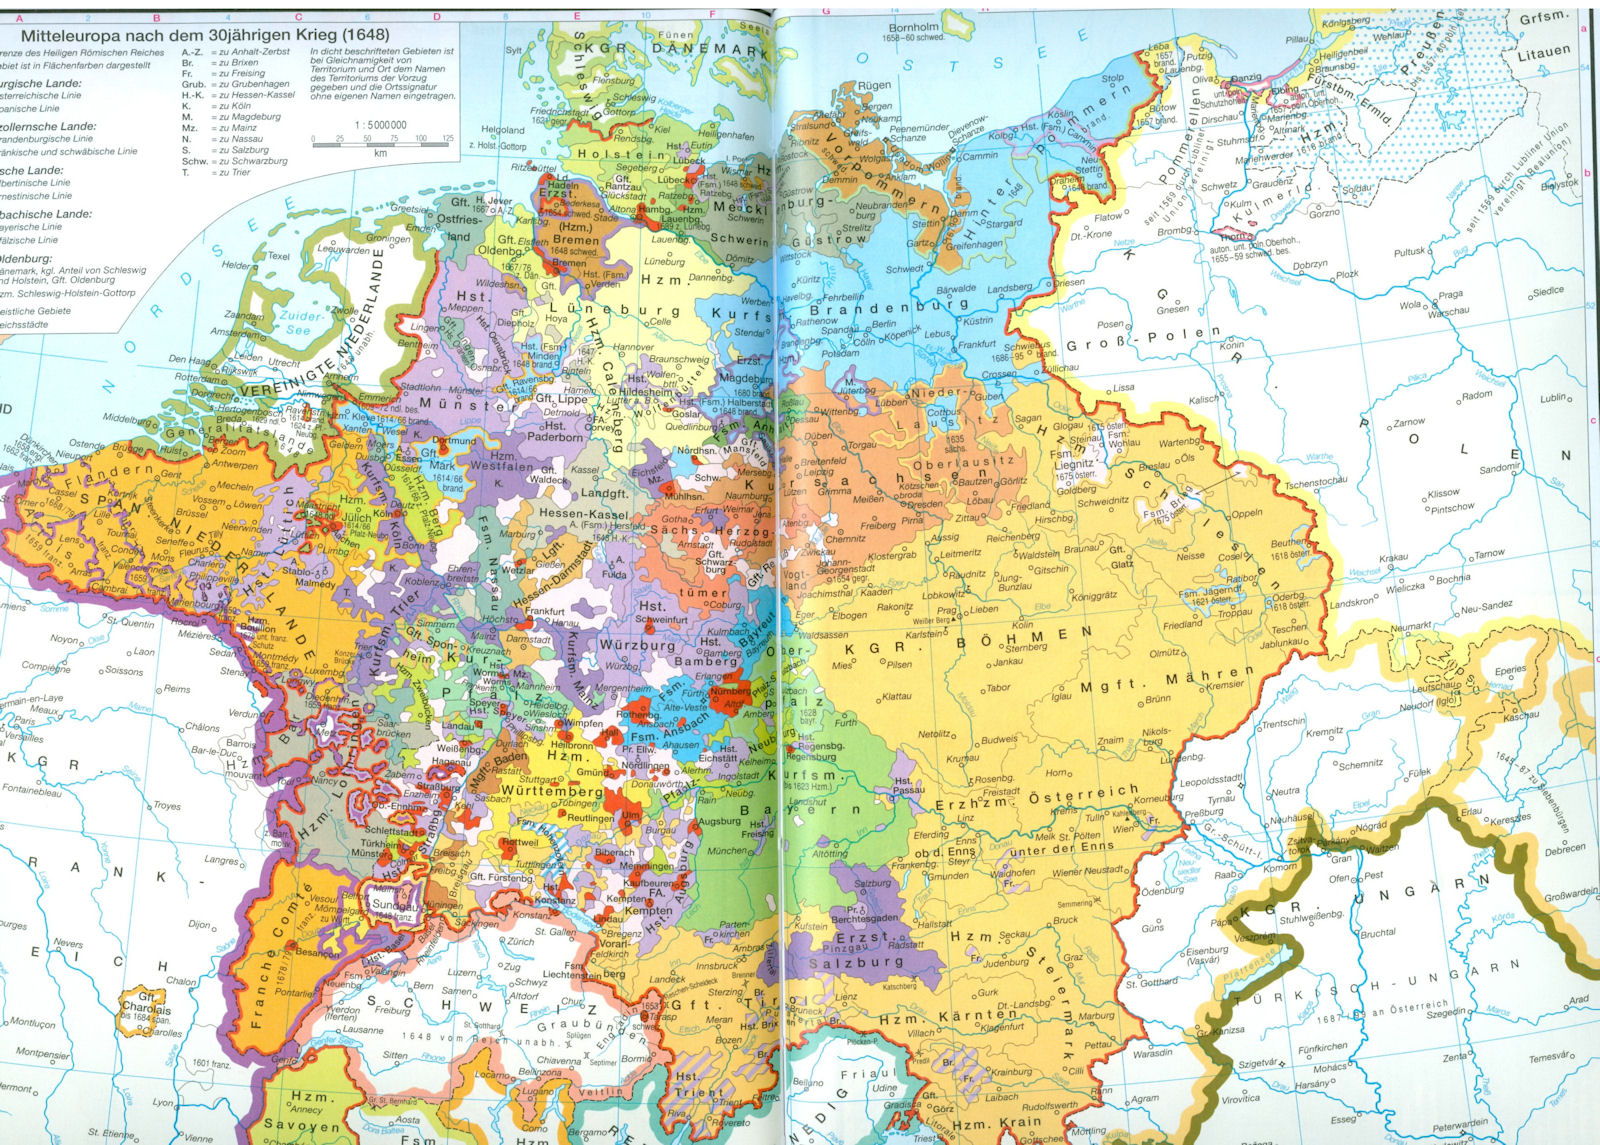 Mitteleuropa 1648